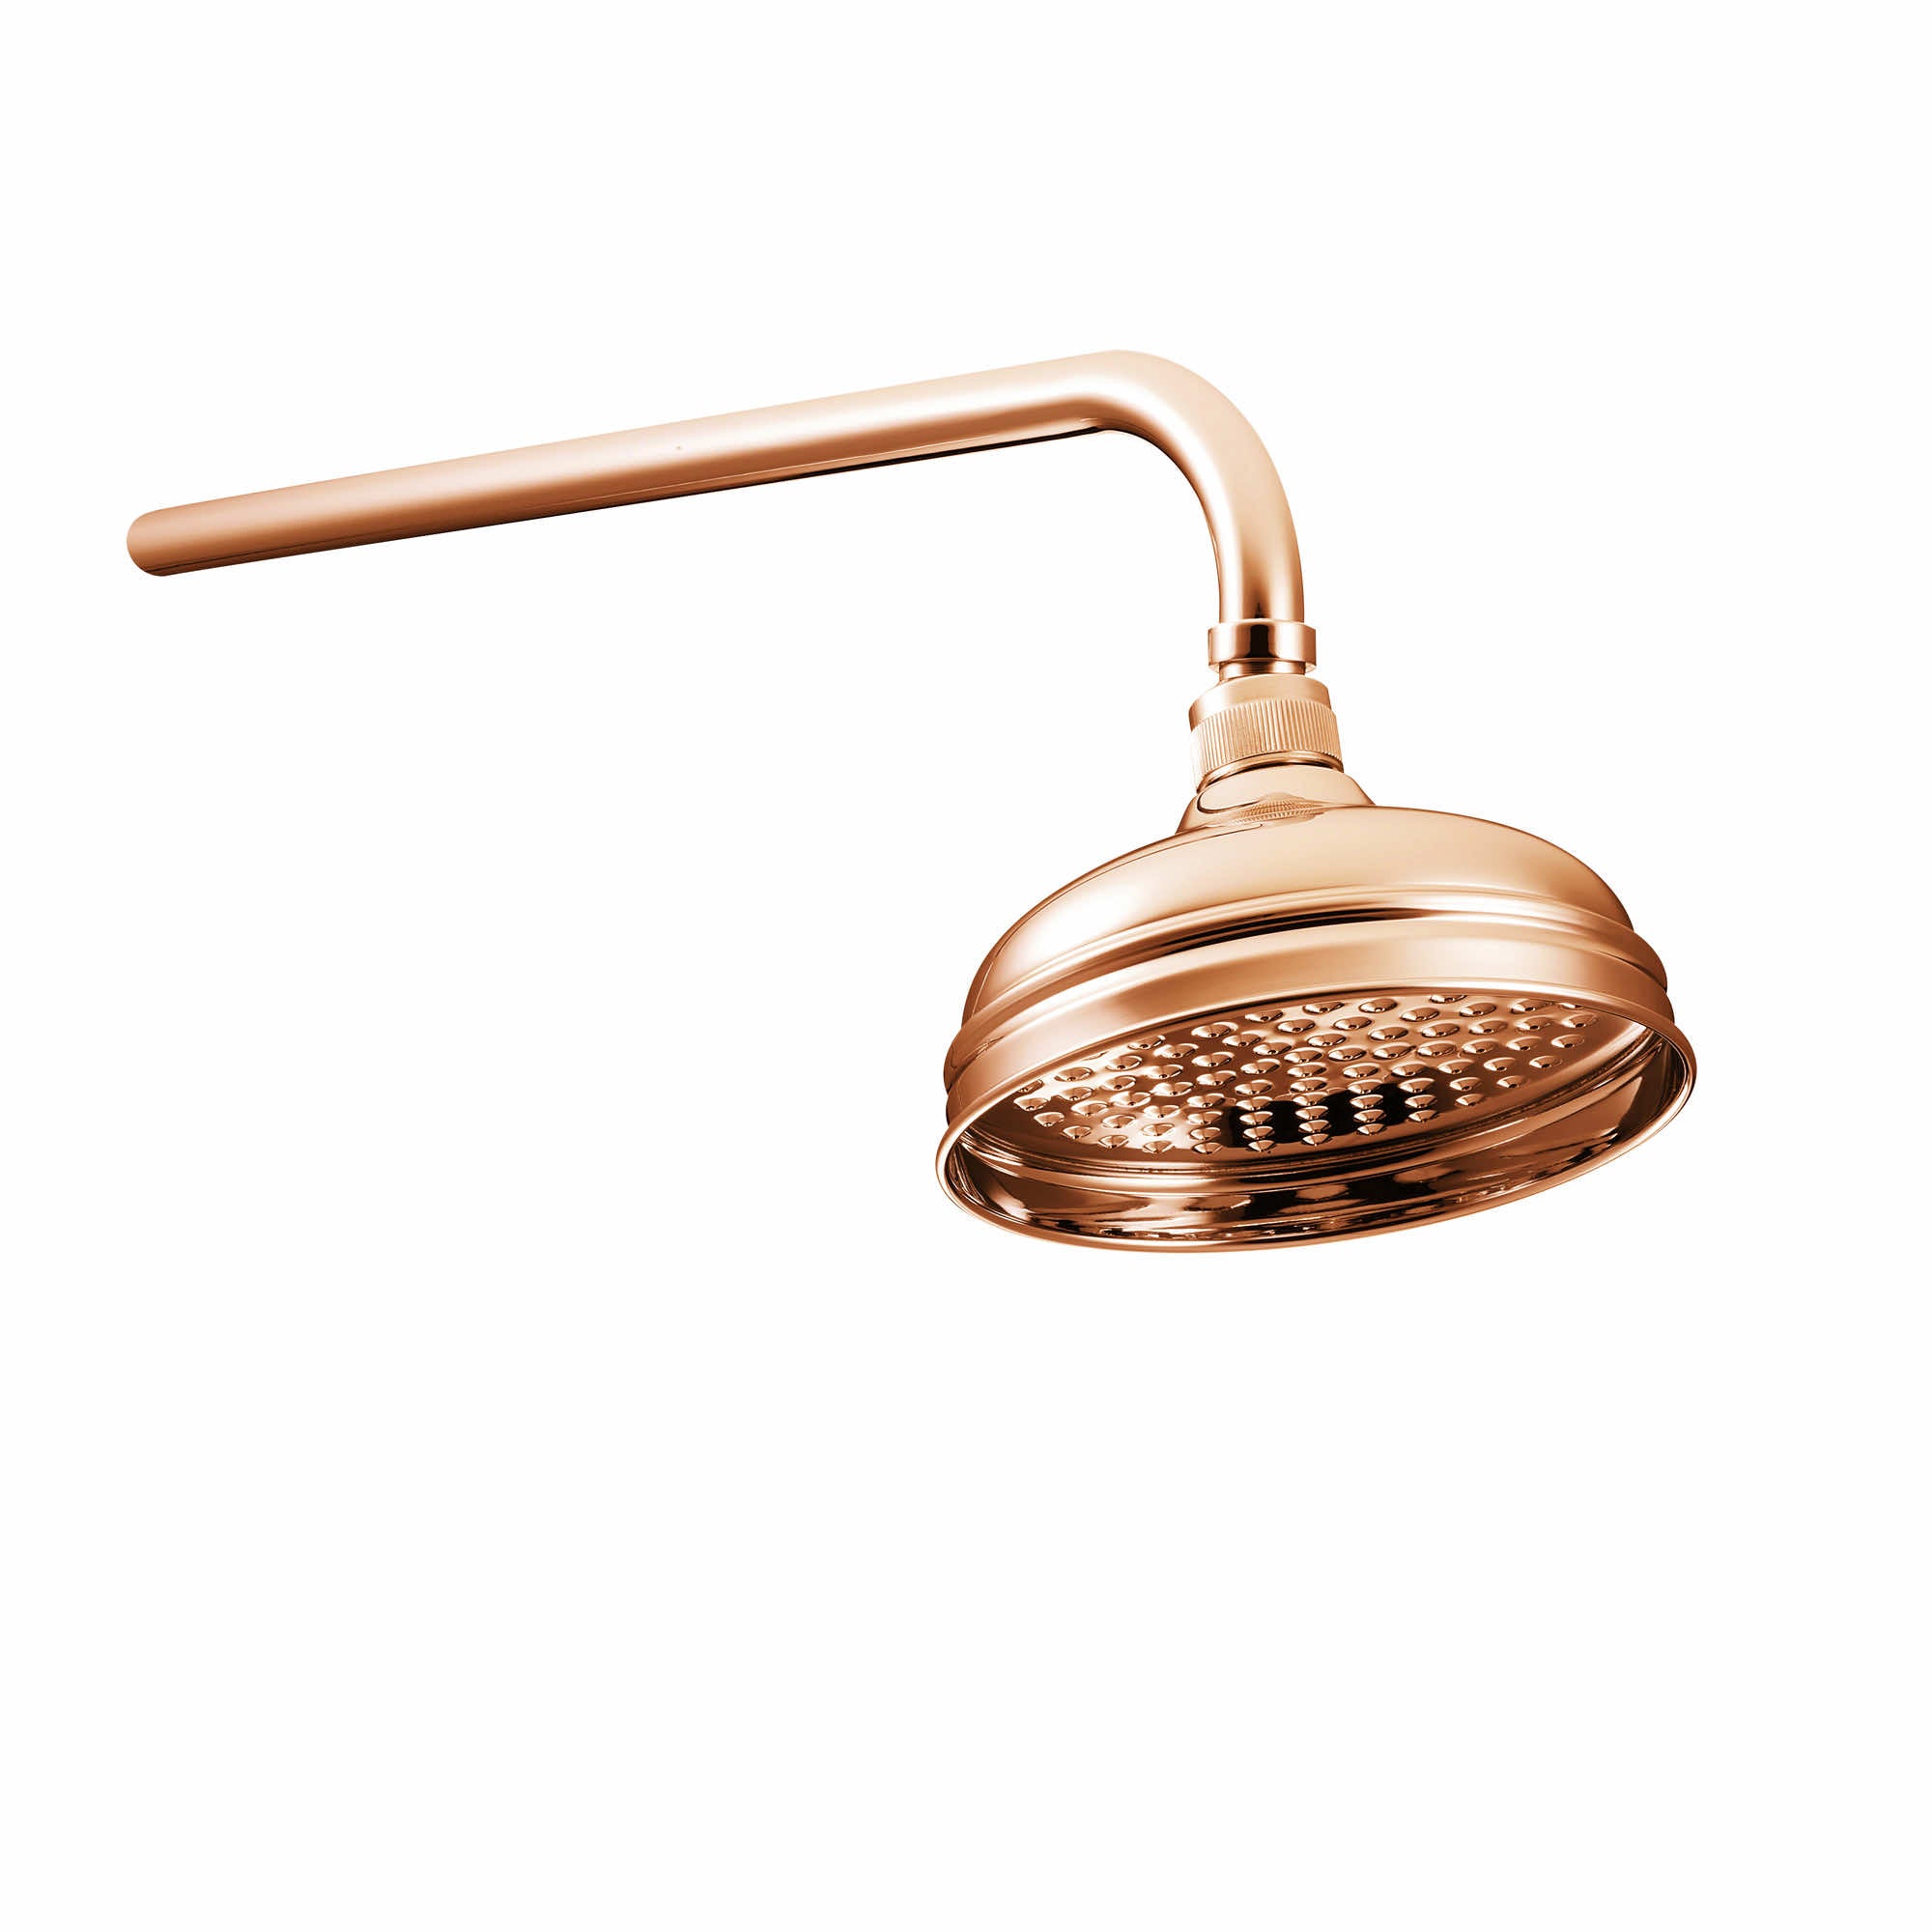 copper shower head 6 inch (150mm) diameter traditional design